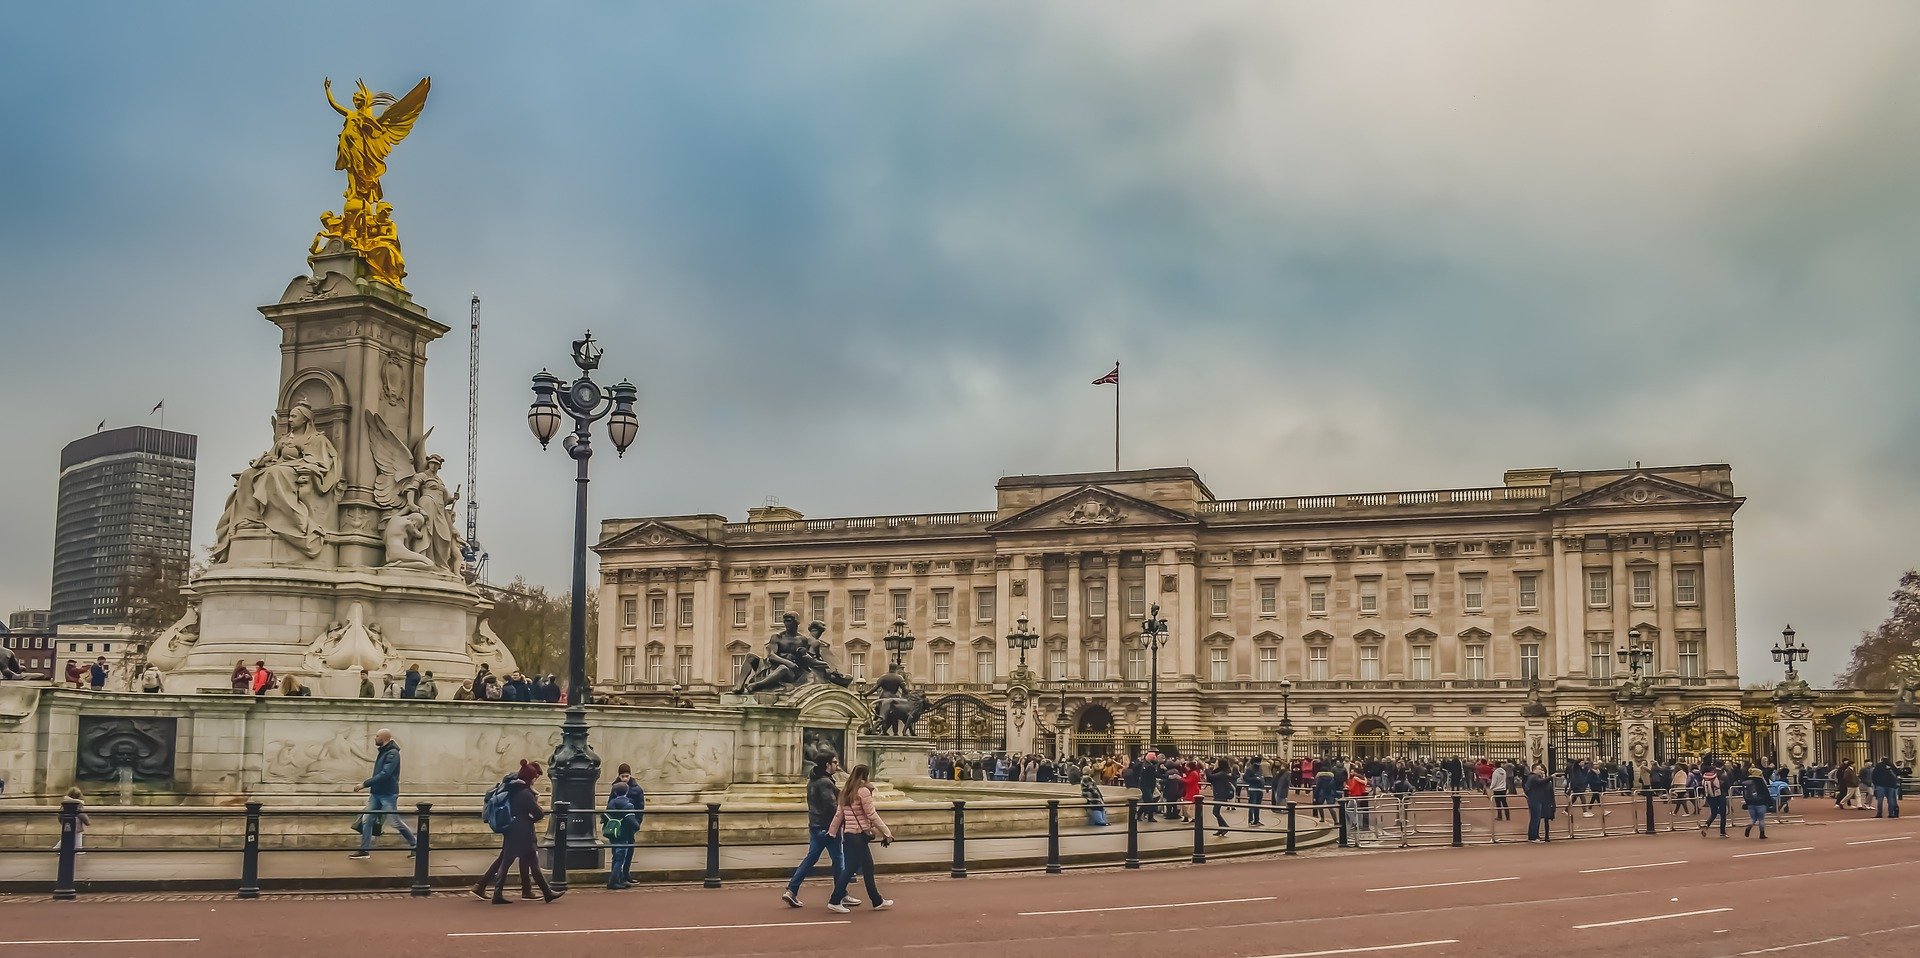 Buckingham Palace UK - UK visa and immigration is now so easy.